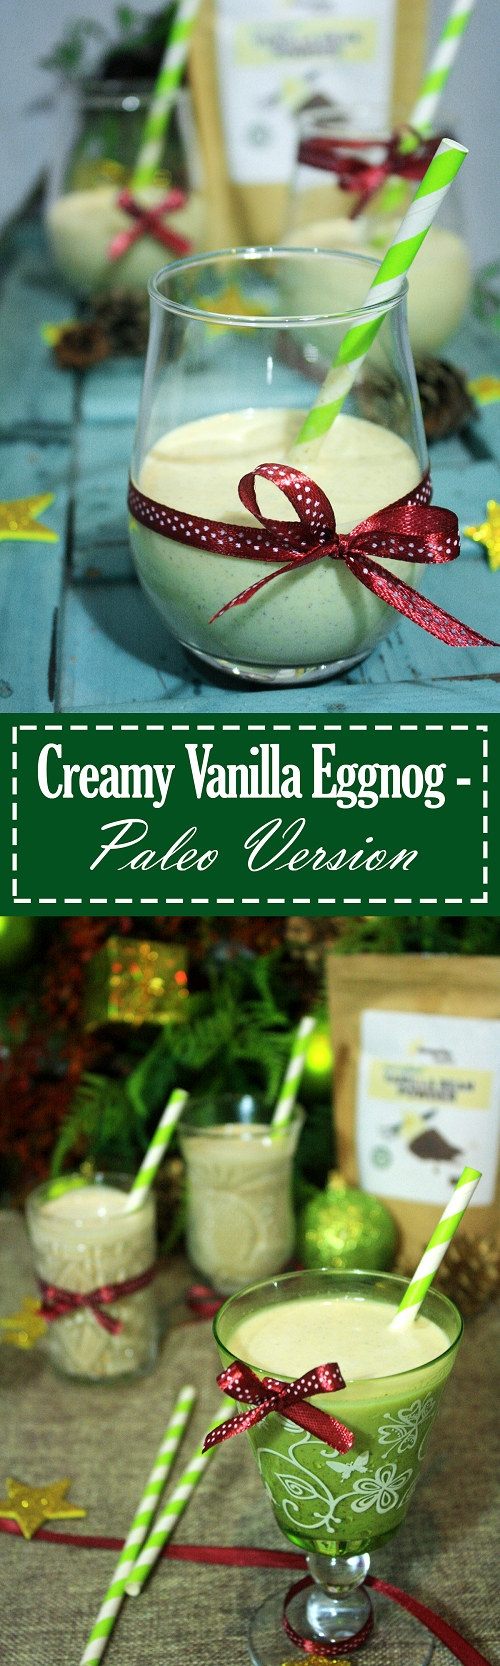 Creamy Paleo Vanilla Eggnog Recipe - Summer Day Naturals